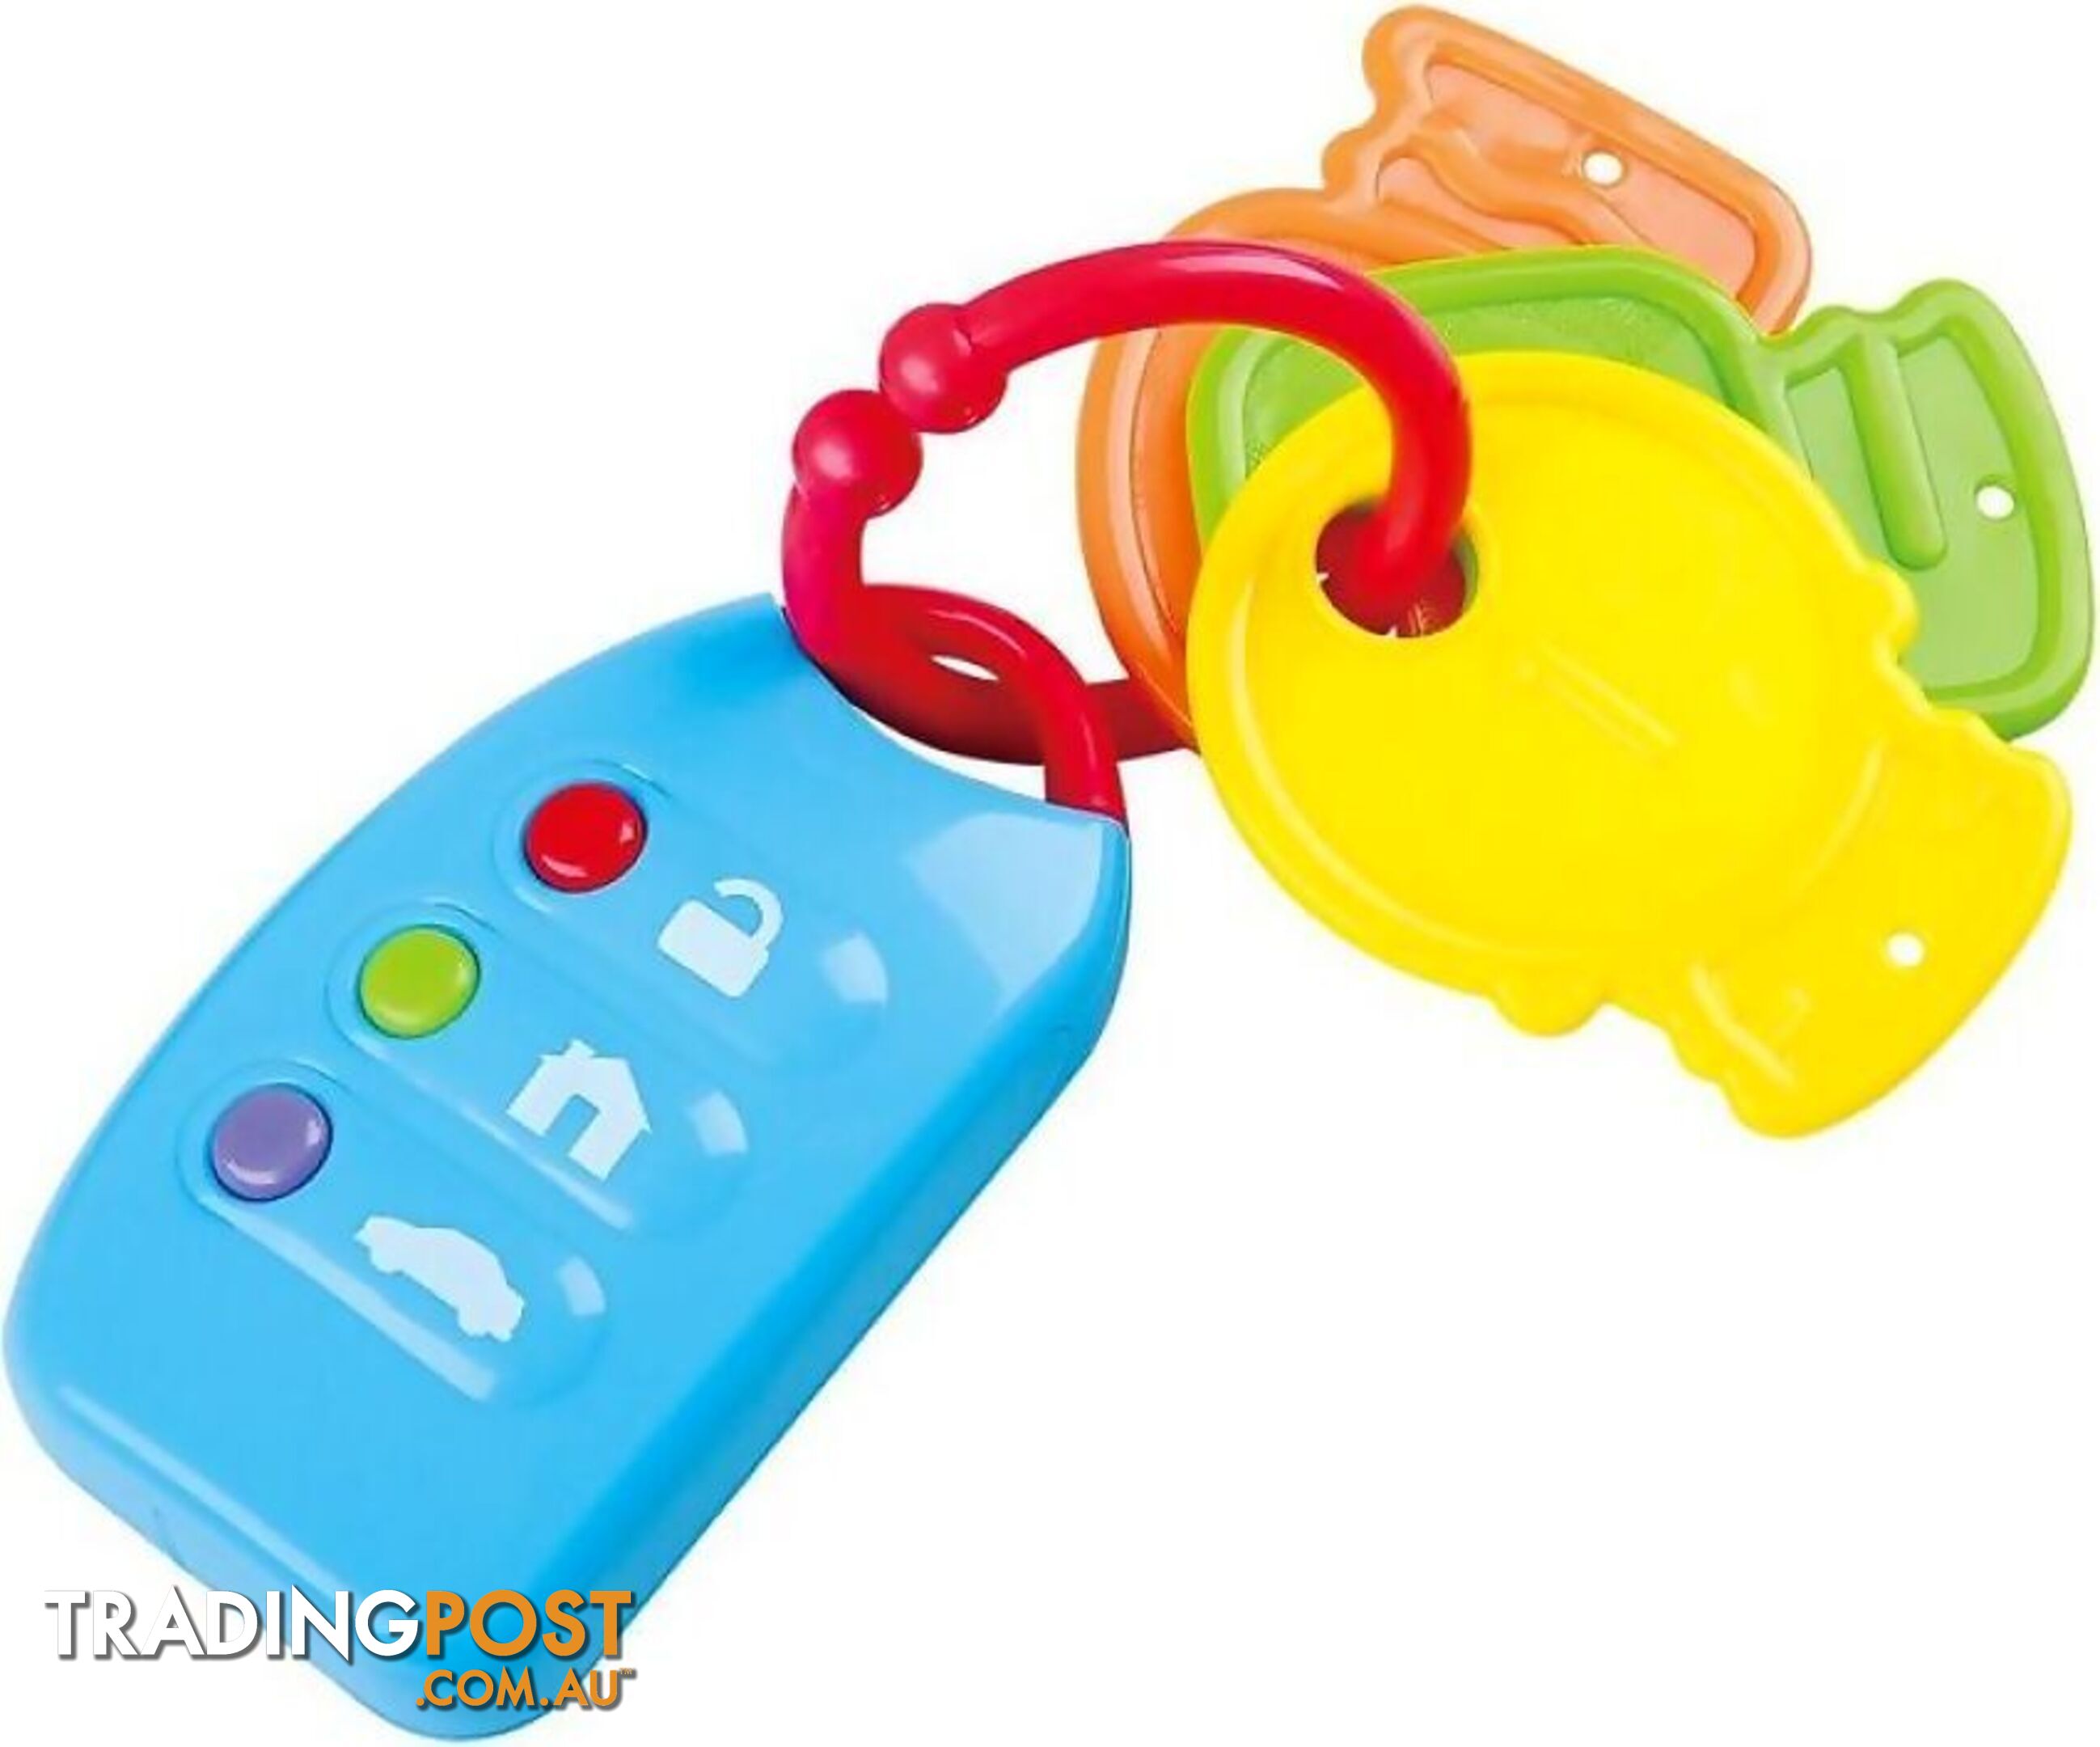 Playgo Toys Ent. Ltd. - My First Car Keys - Art67531 - 4892401026835